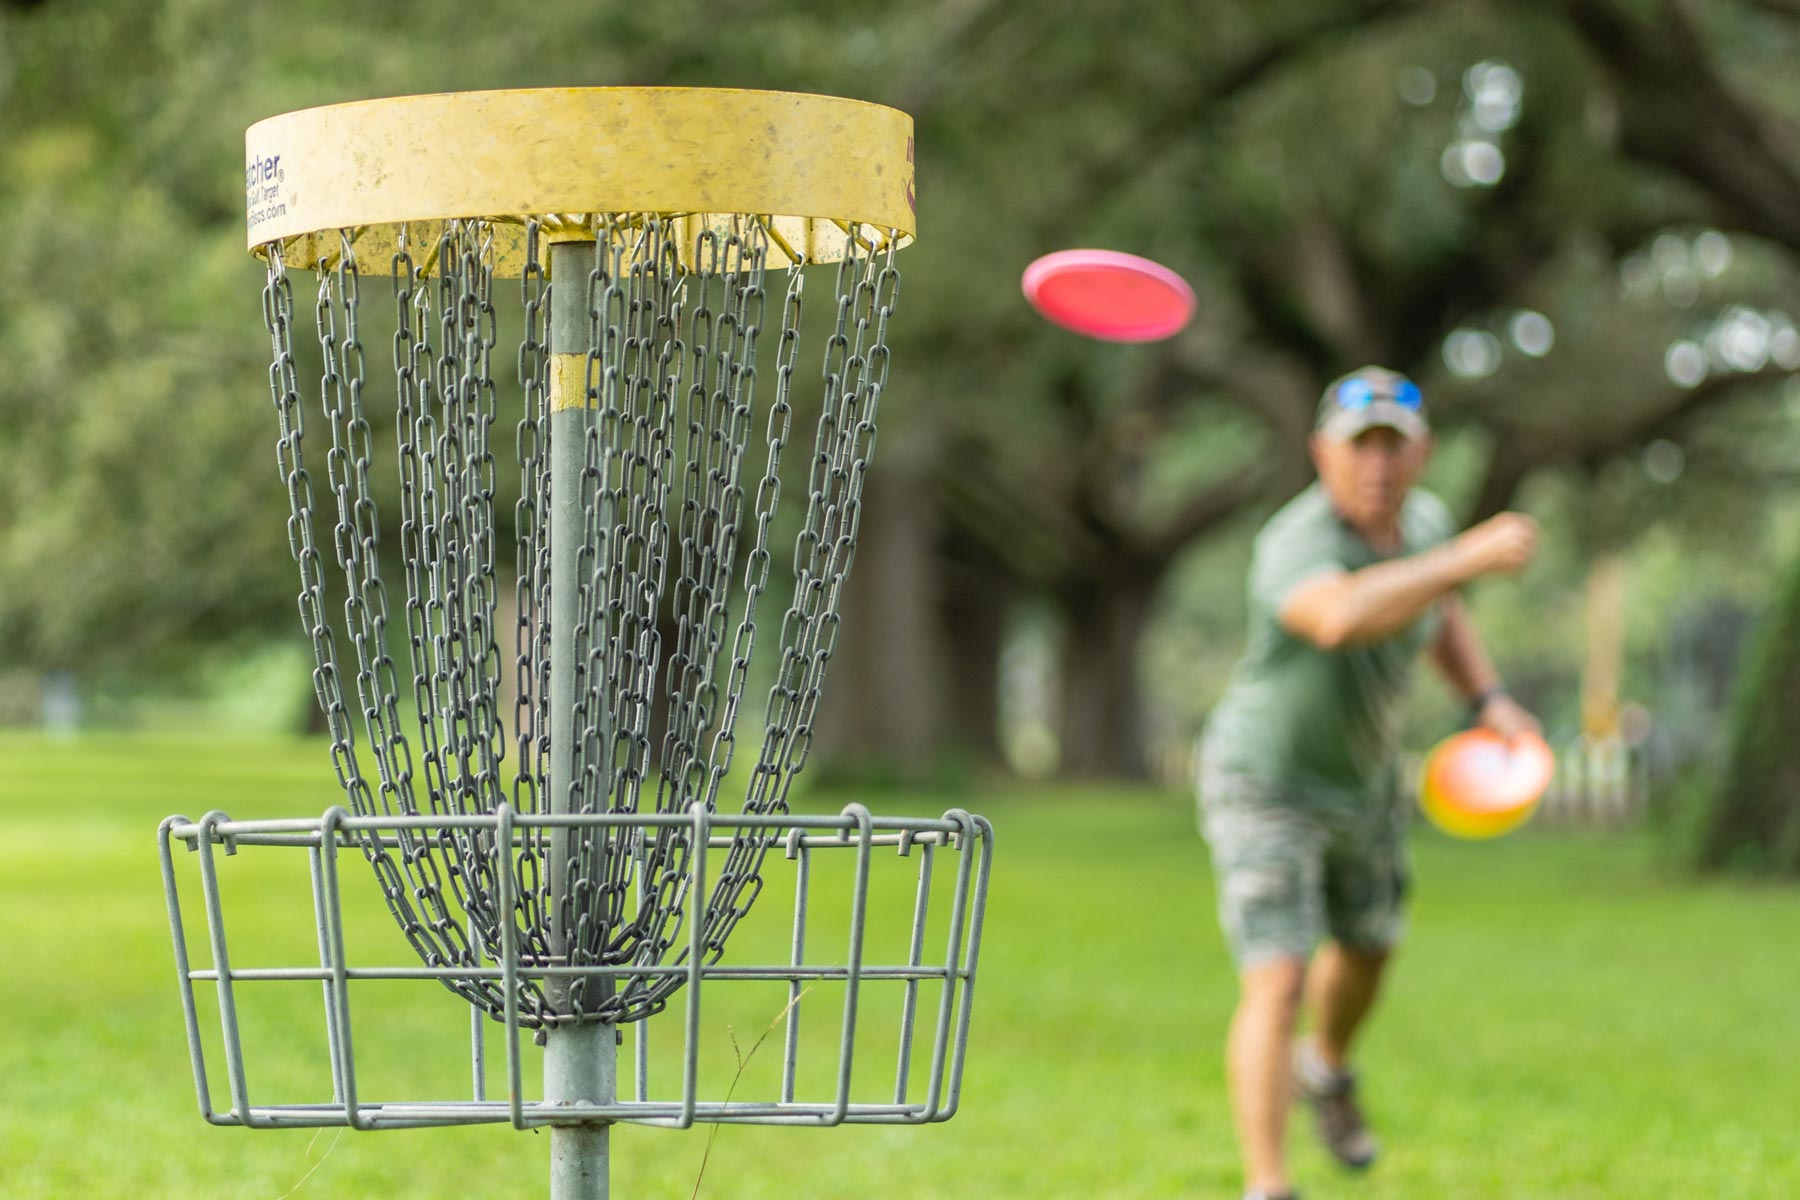 Frisbee golfer throwing towards a basket